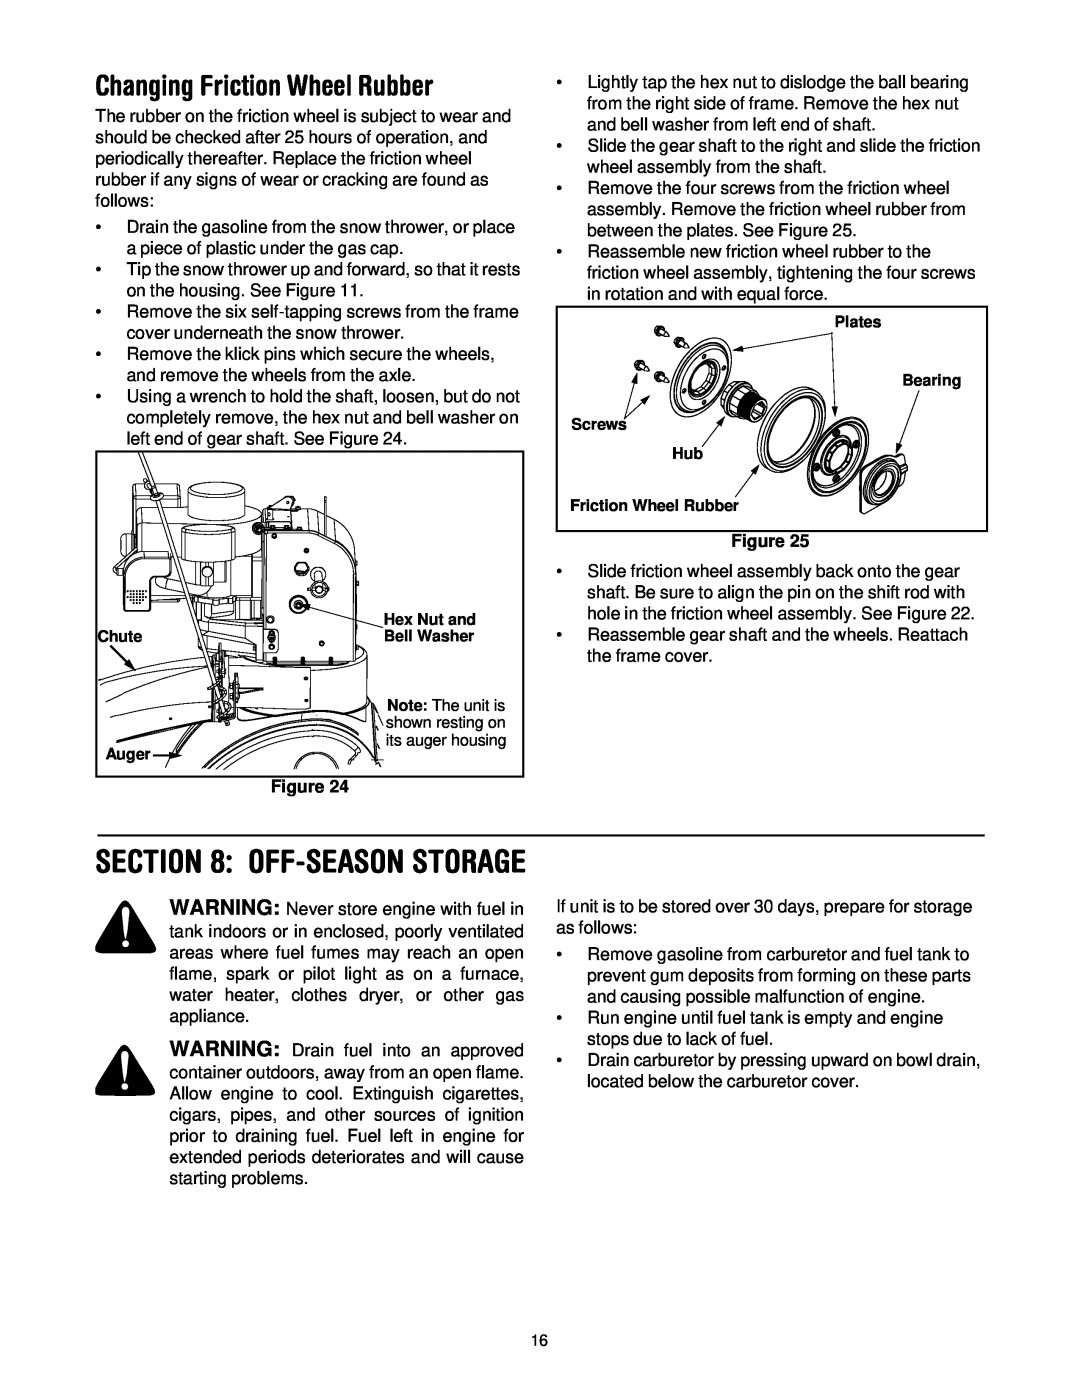 MTD H660G manual Changing Friction Wheel Rubber, Off-Season Storage 